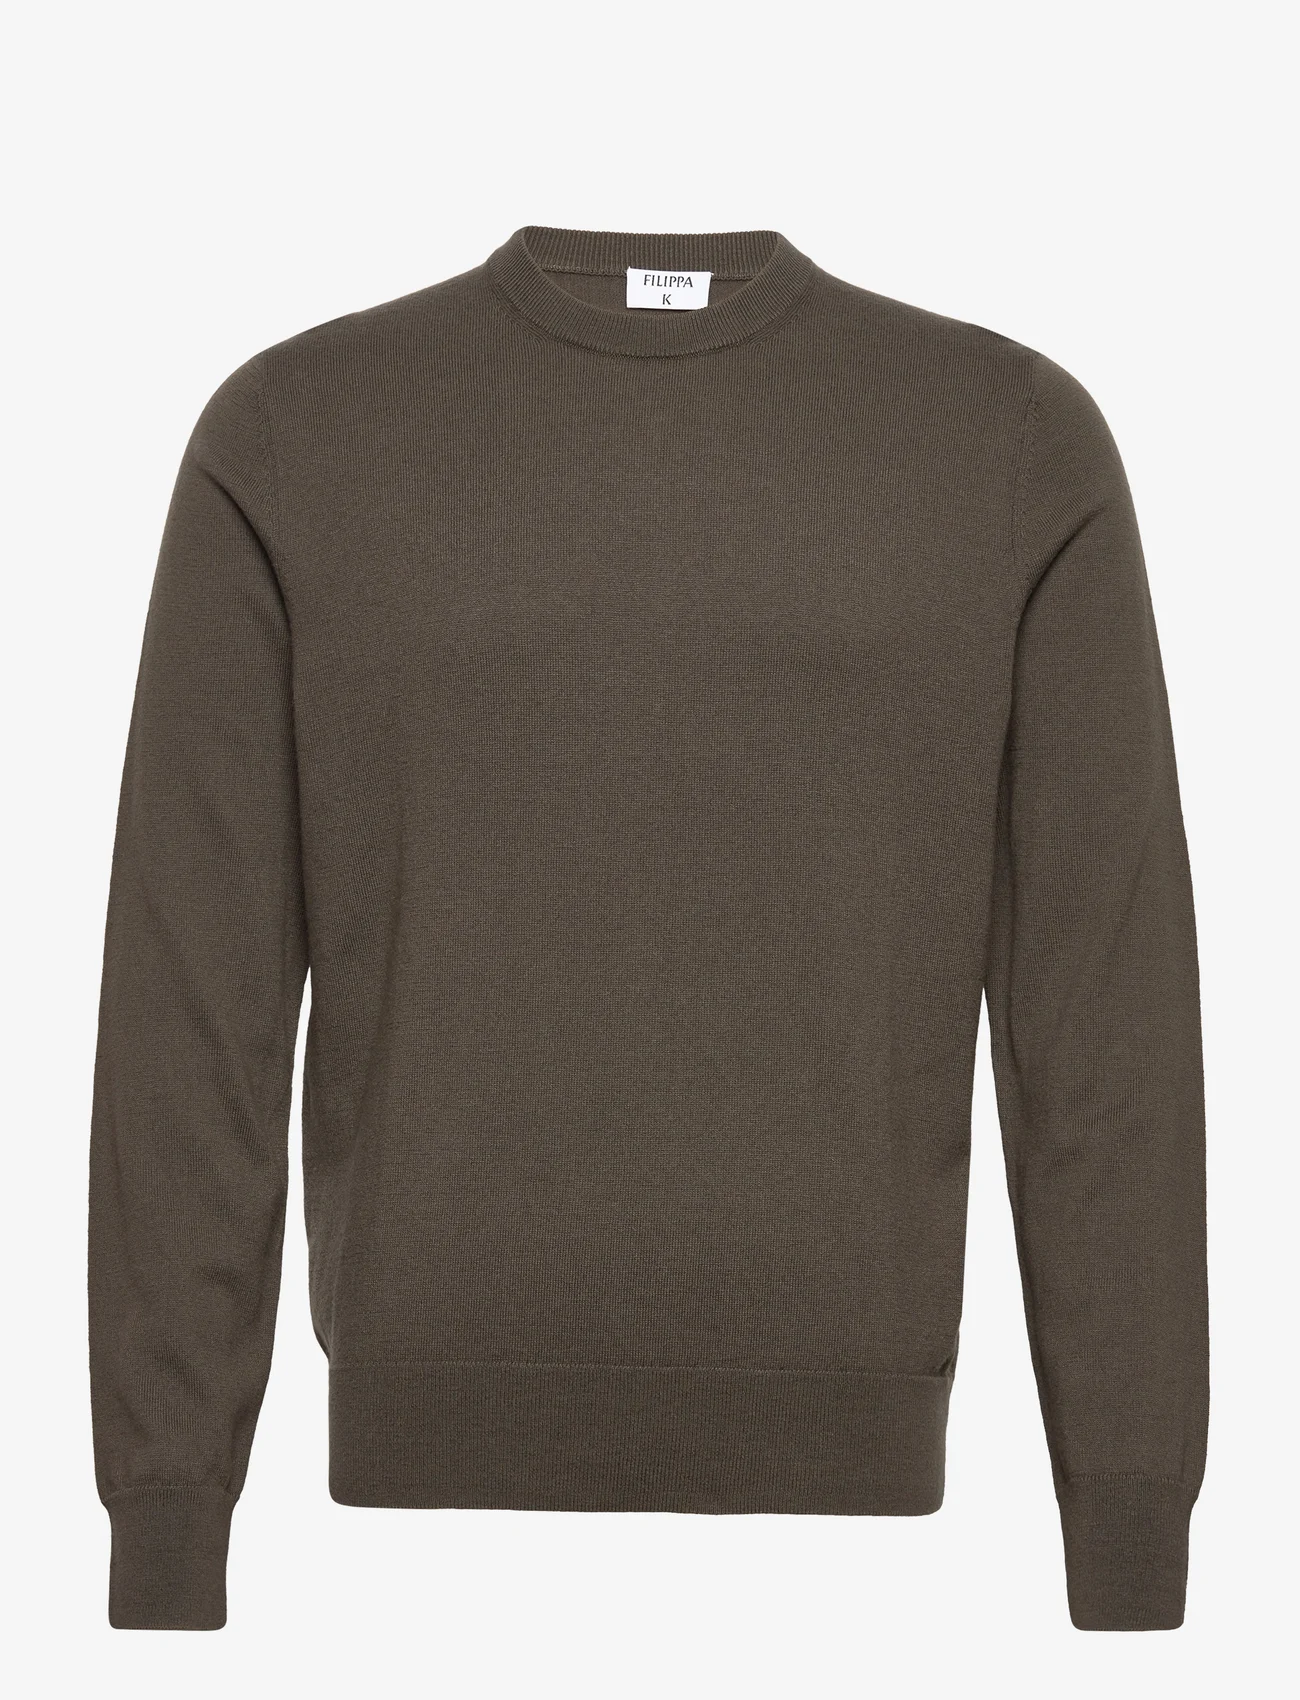 Filippa K - Cotton Merino Sweater - dark fores - 0